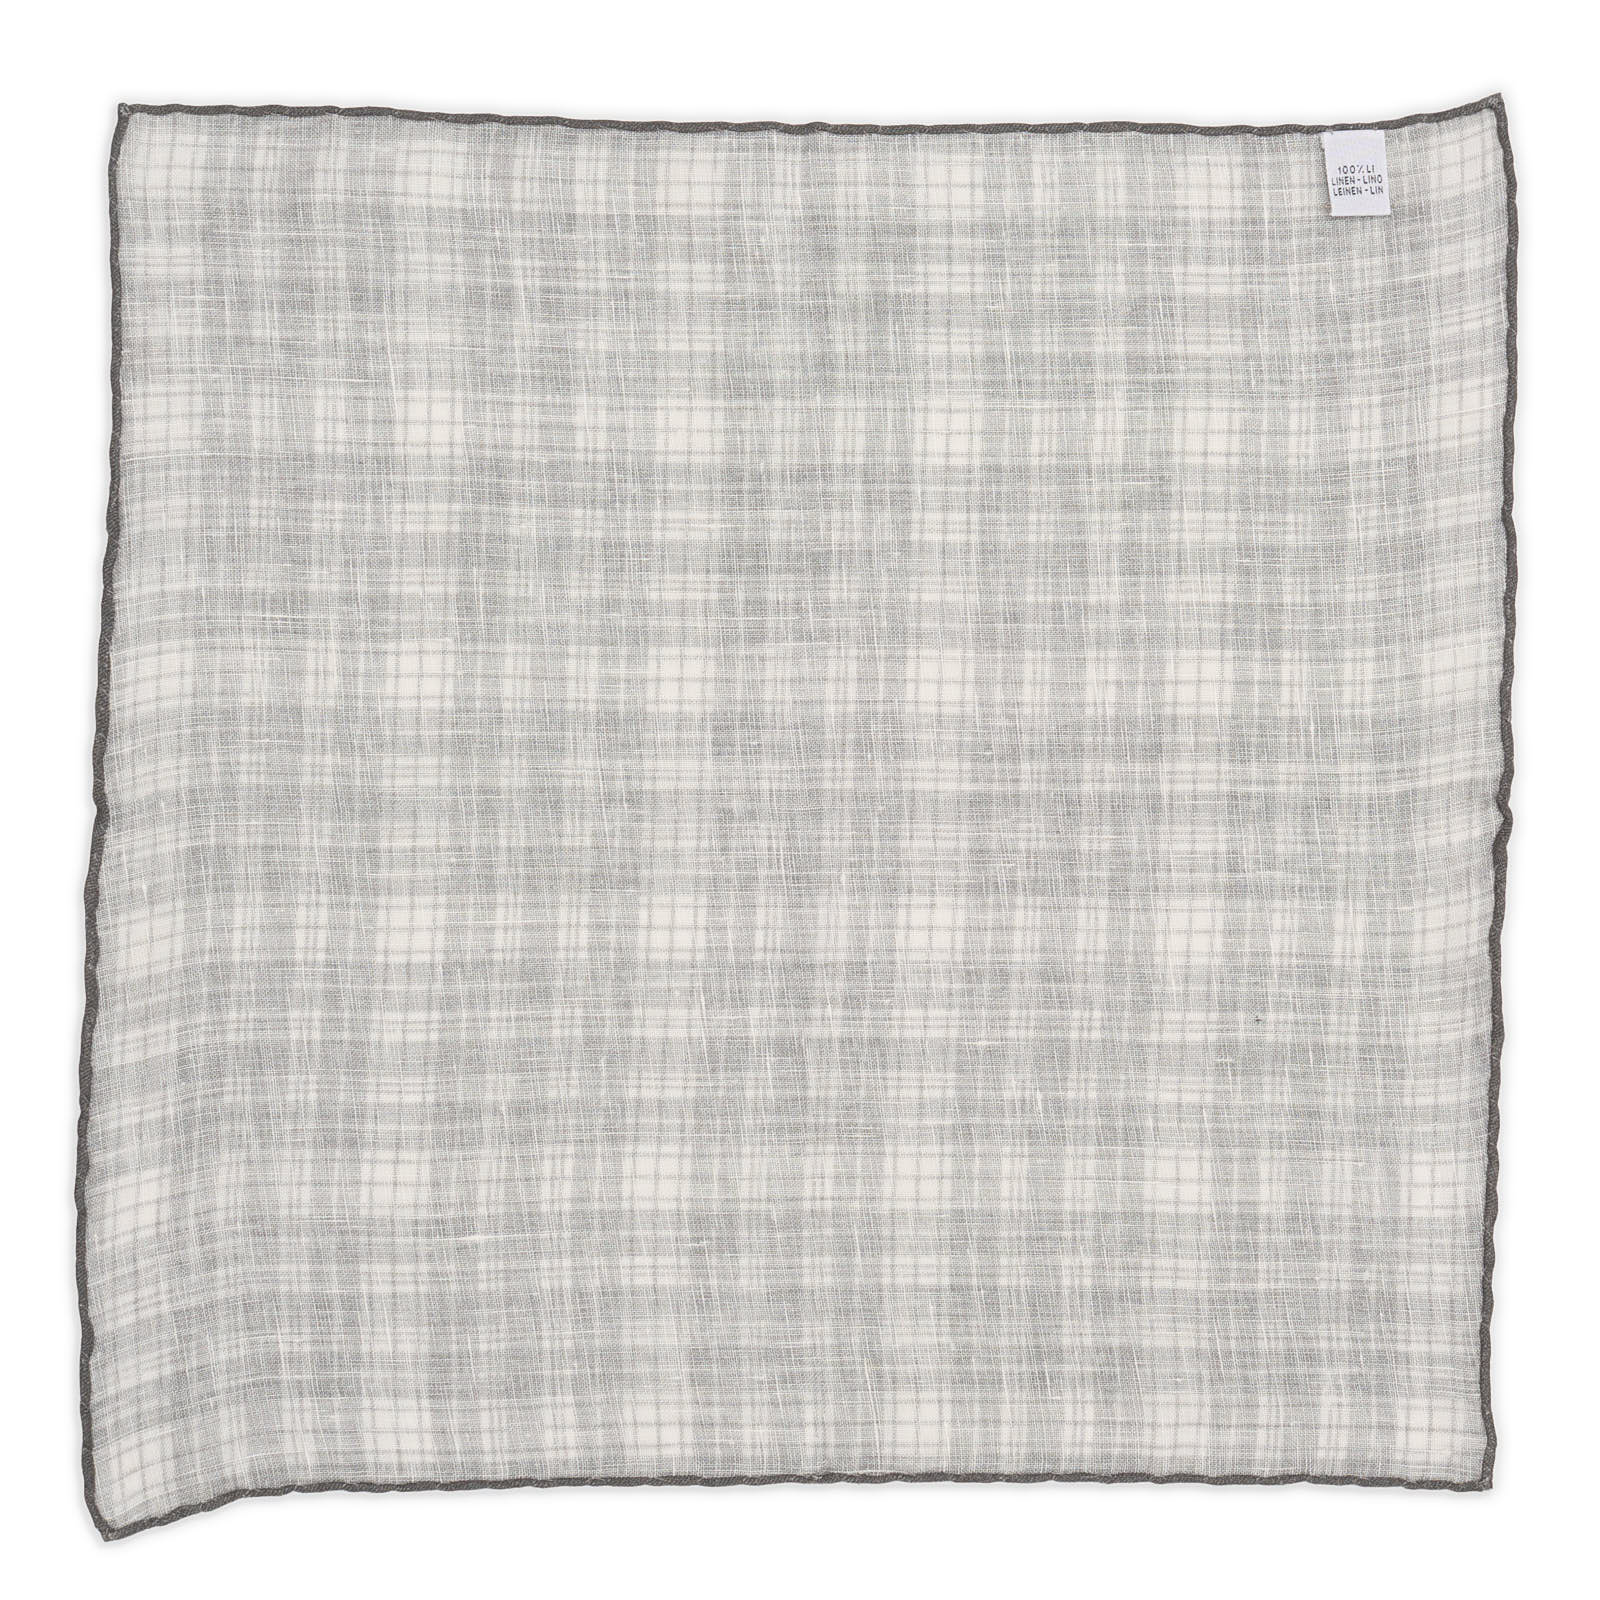 VANNUCCI Milano Handmade Gray Plaid Linen Pocket Square NEW 32cm x 32cm